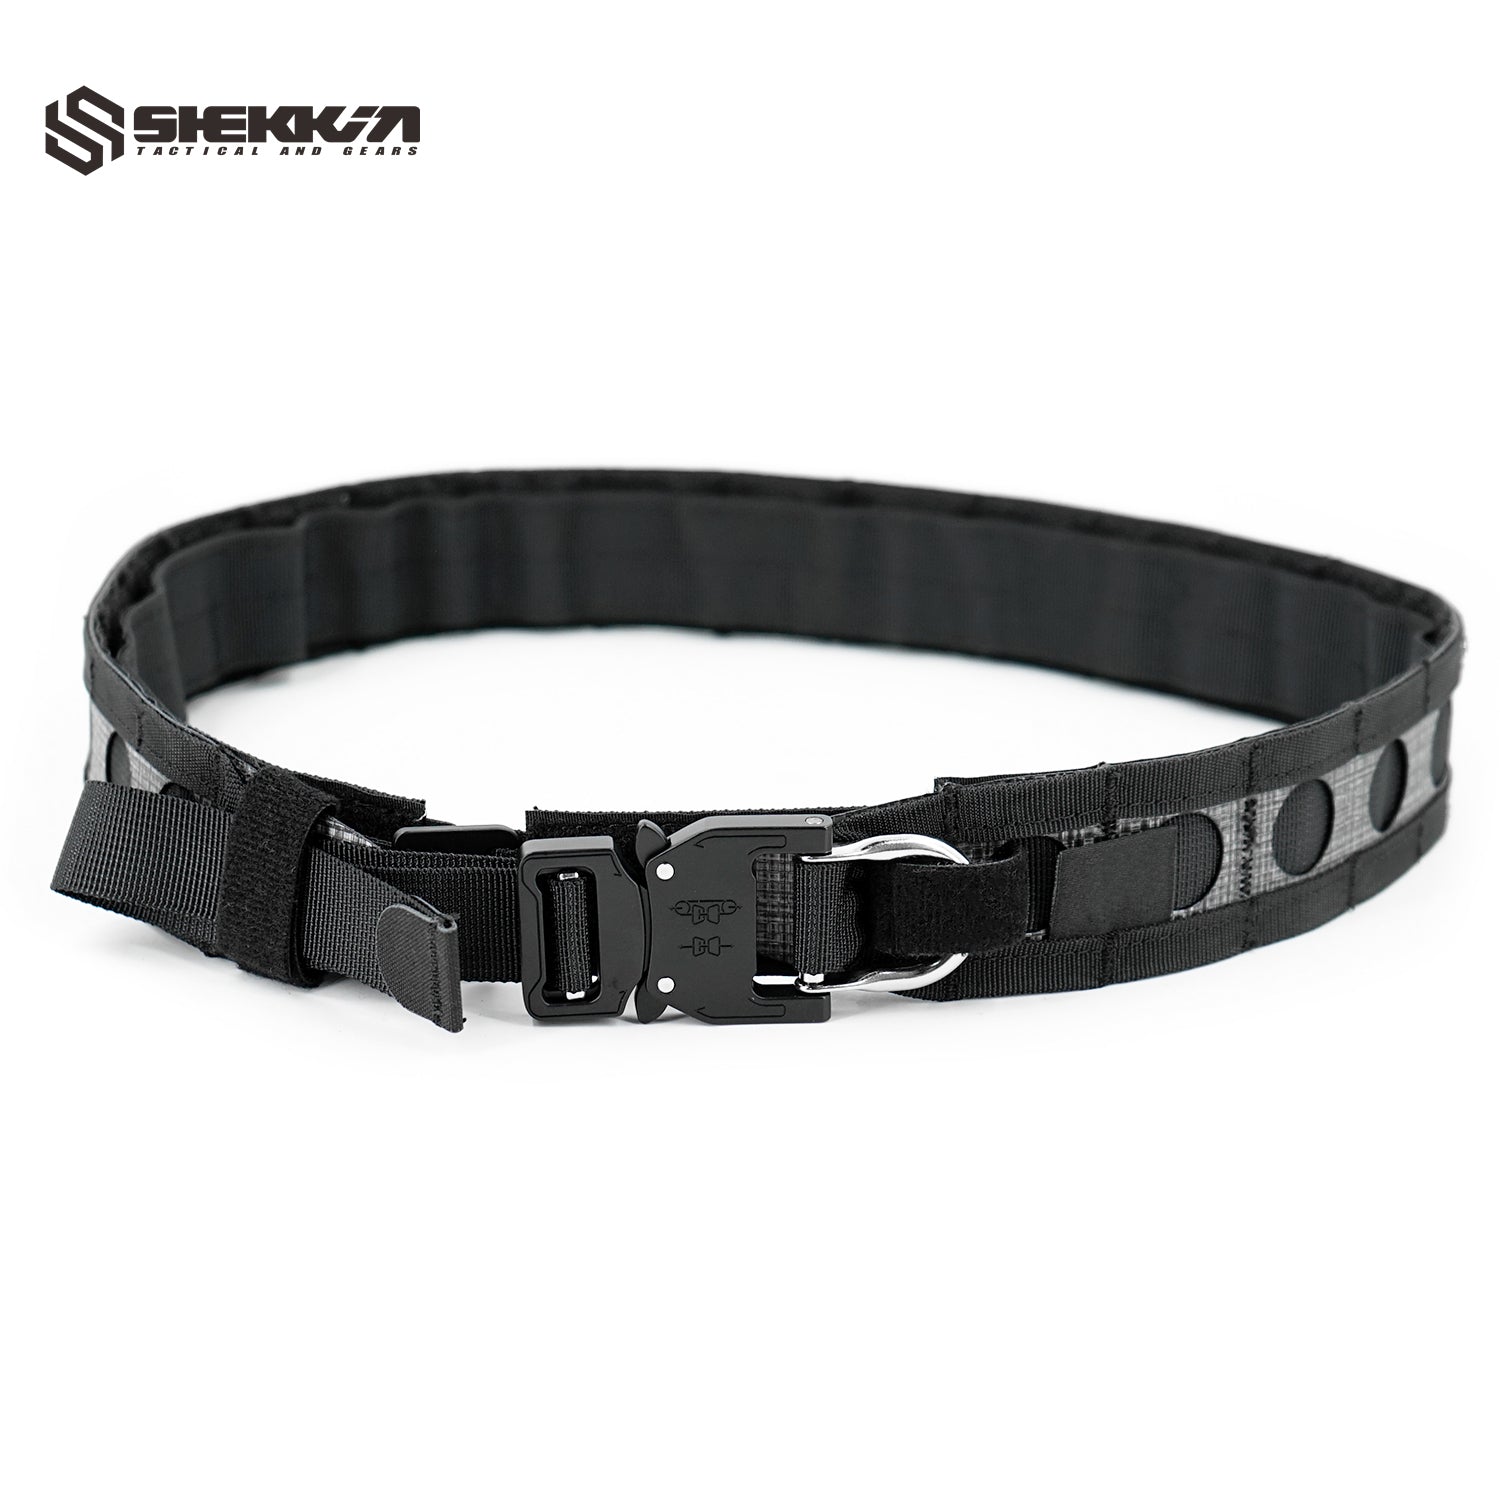 Bison Belt - Shekkin Gears